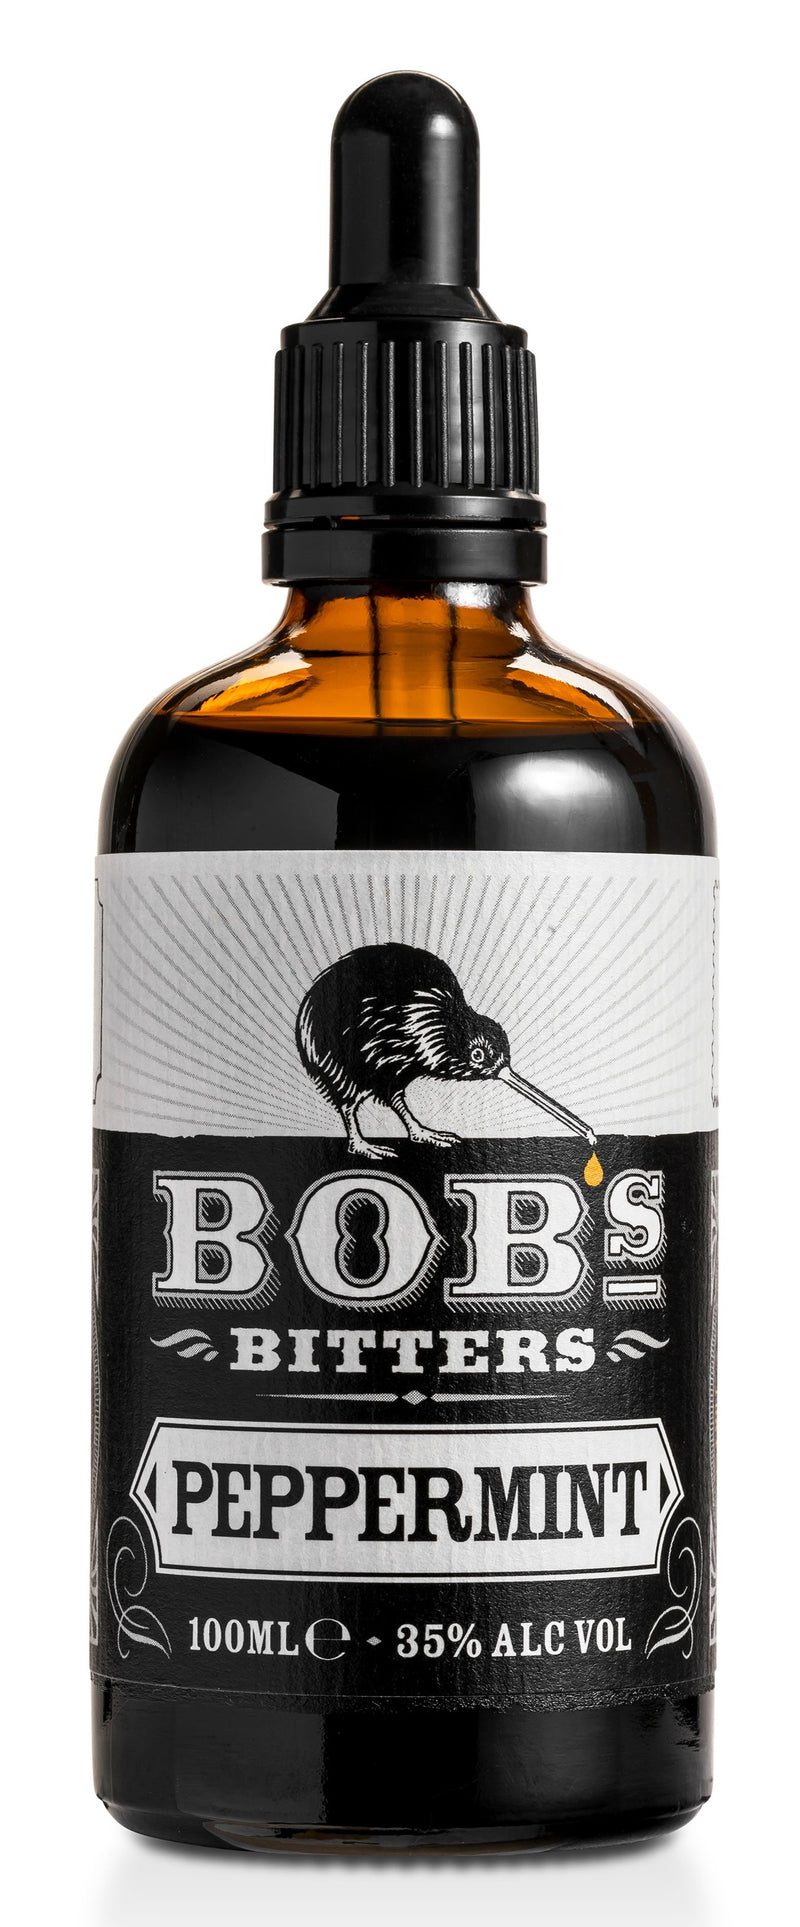 Bobs Peppermint Bitters 100ml